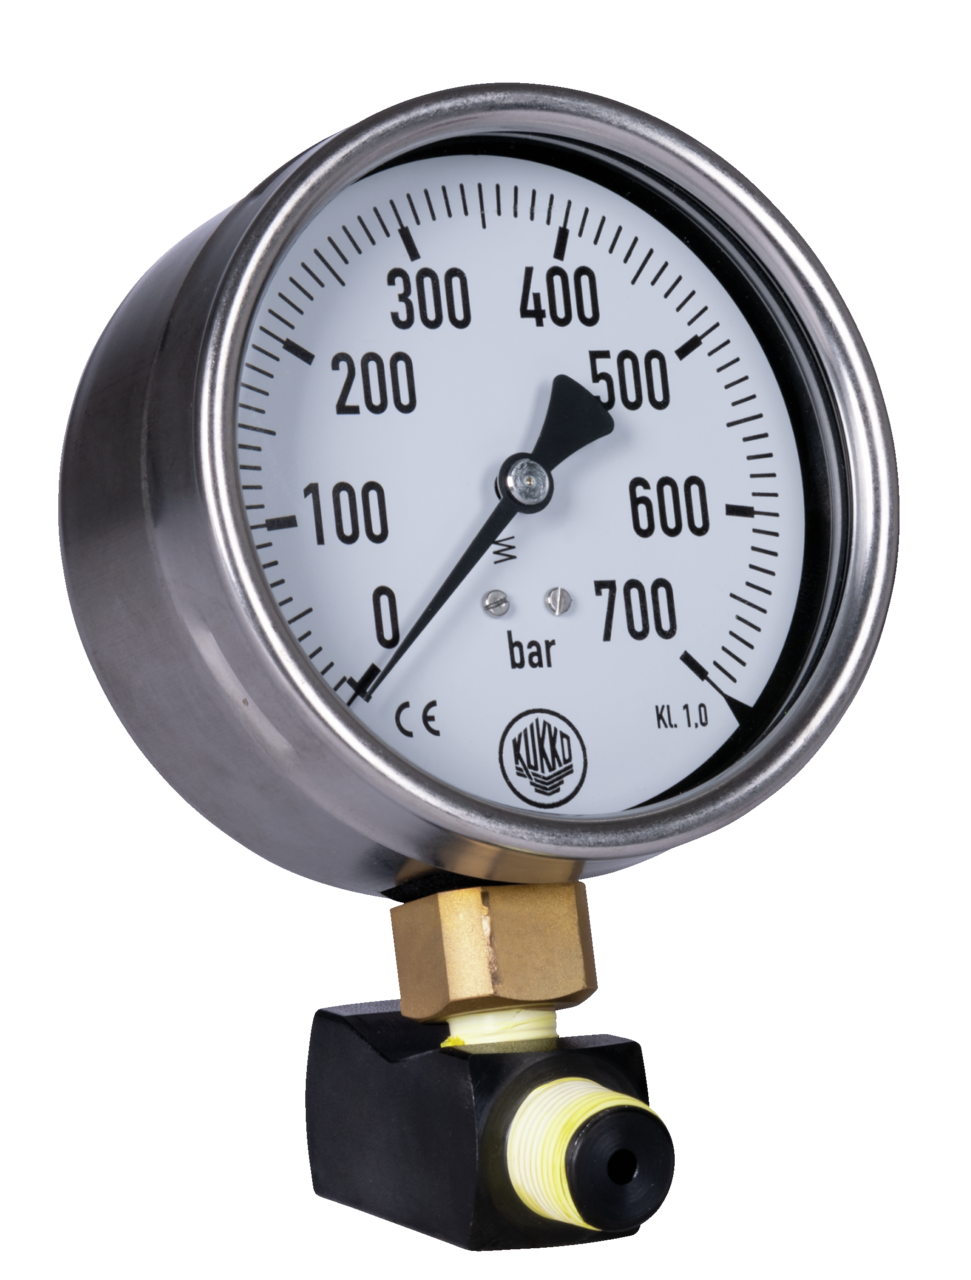 700 bar pressure gauge